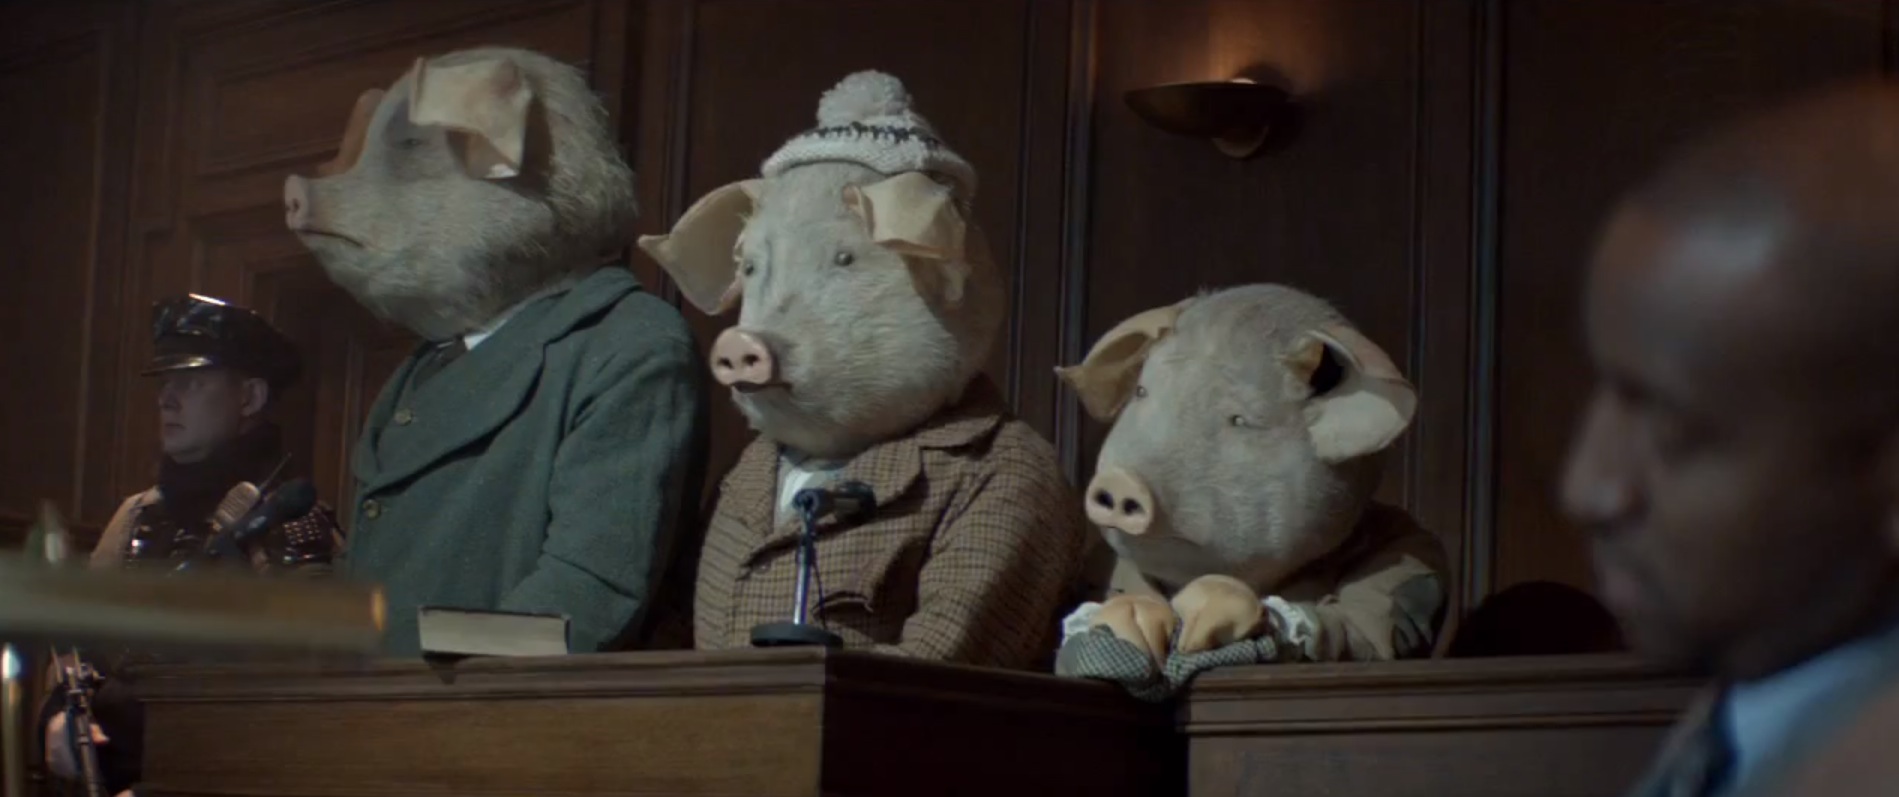 guardian-open-journalism-three-little-pigs6